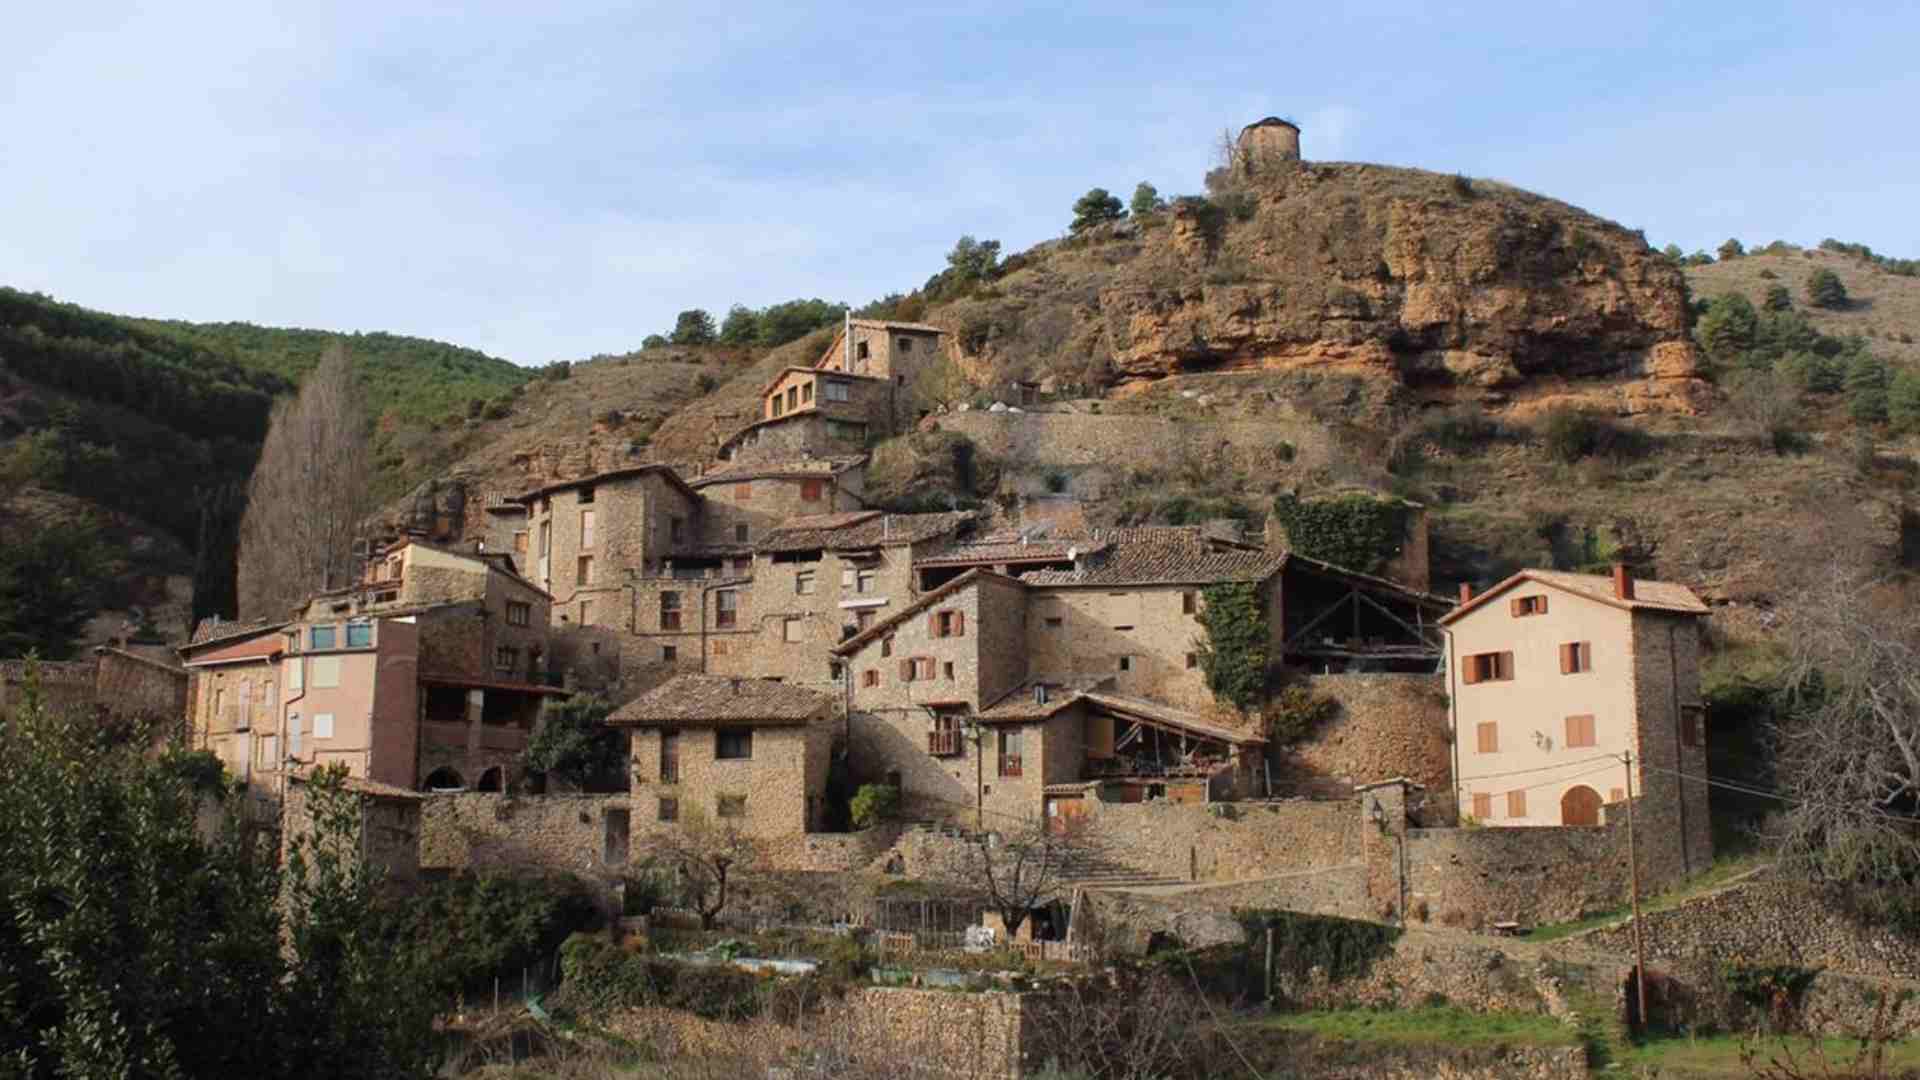 L'increïble poble medieval català que sorgeix entre roques i que té un bonic salt d'aigua